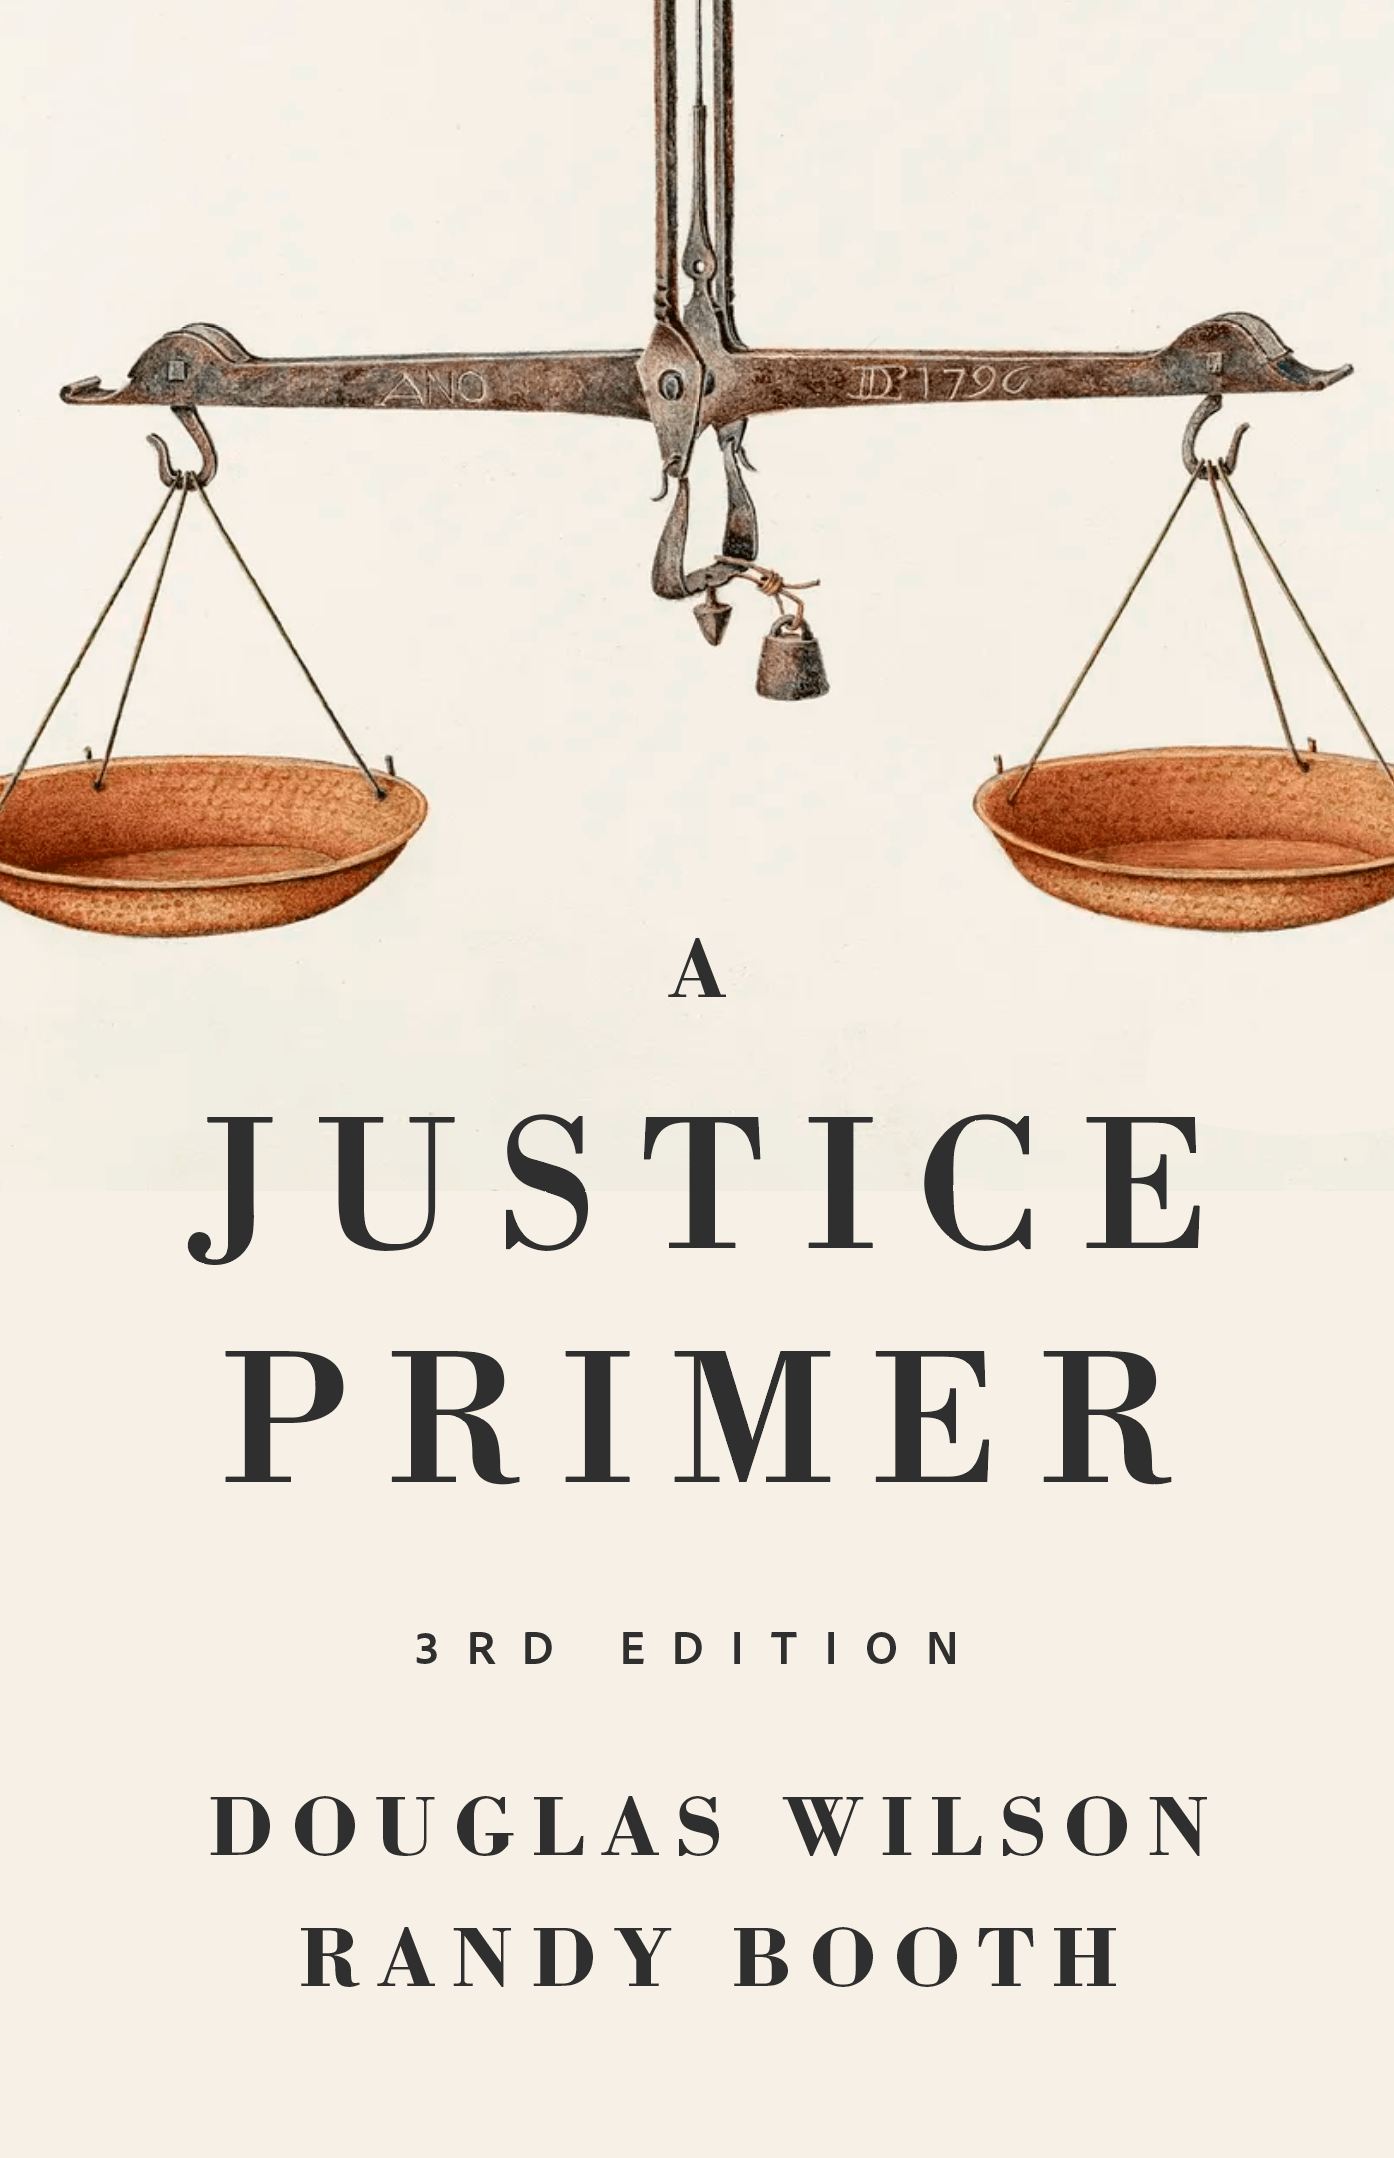 A Justice Primer